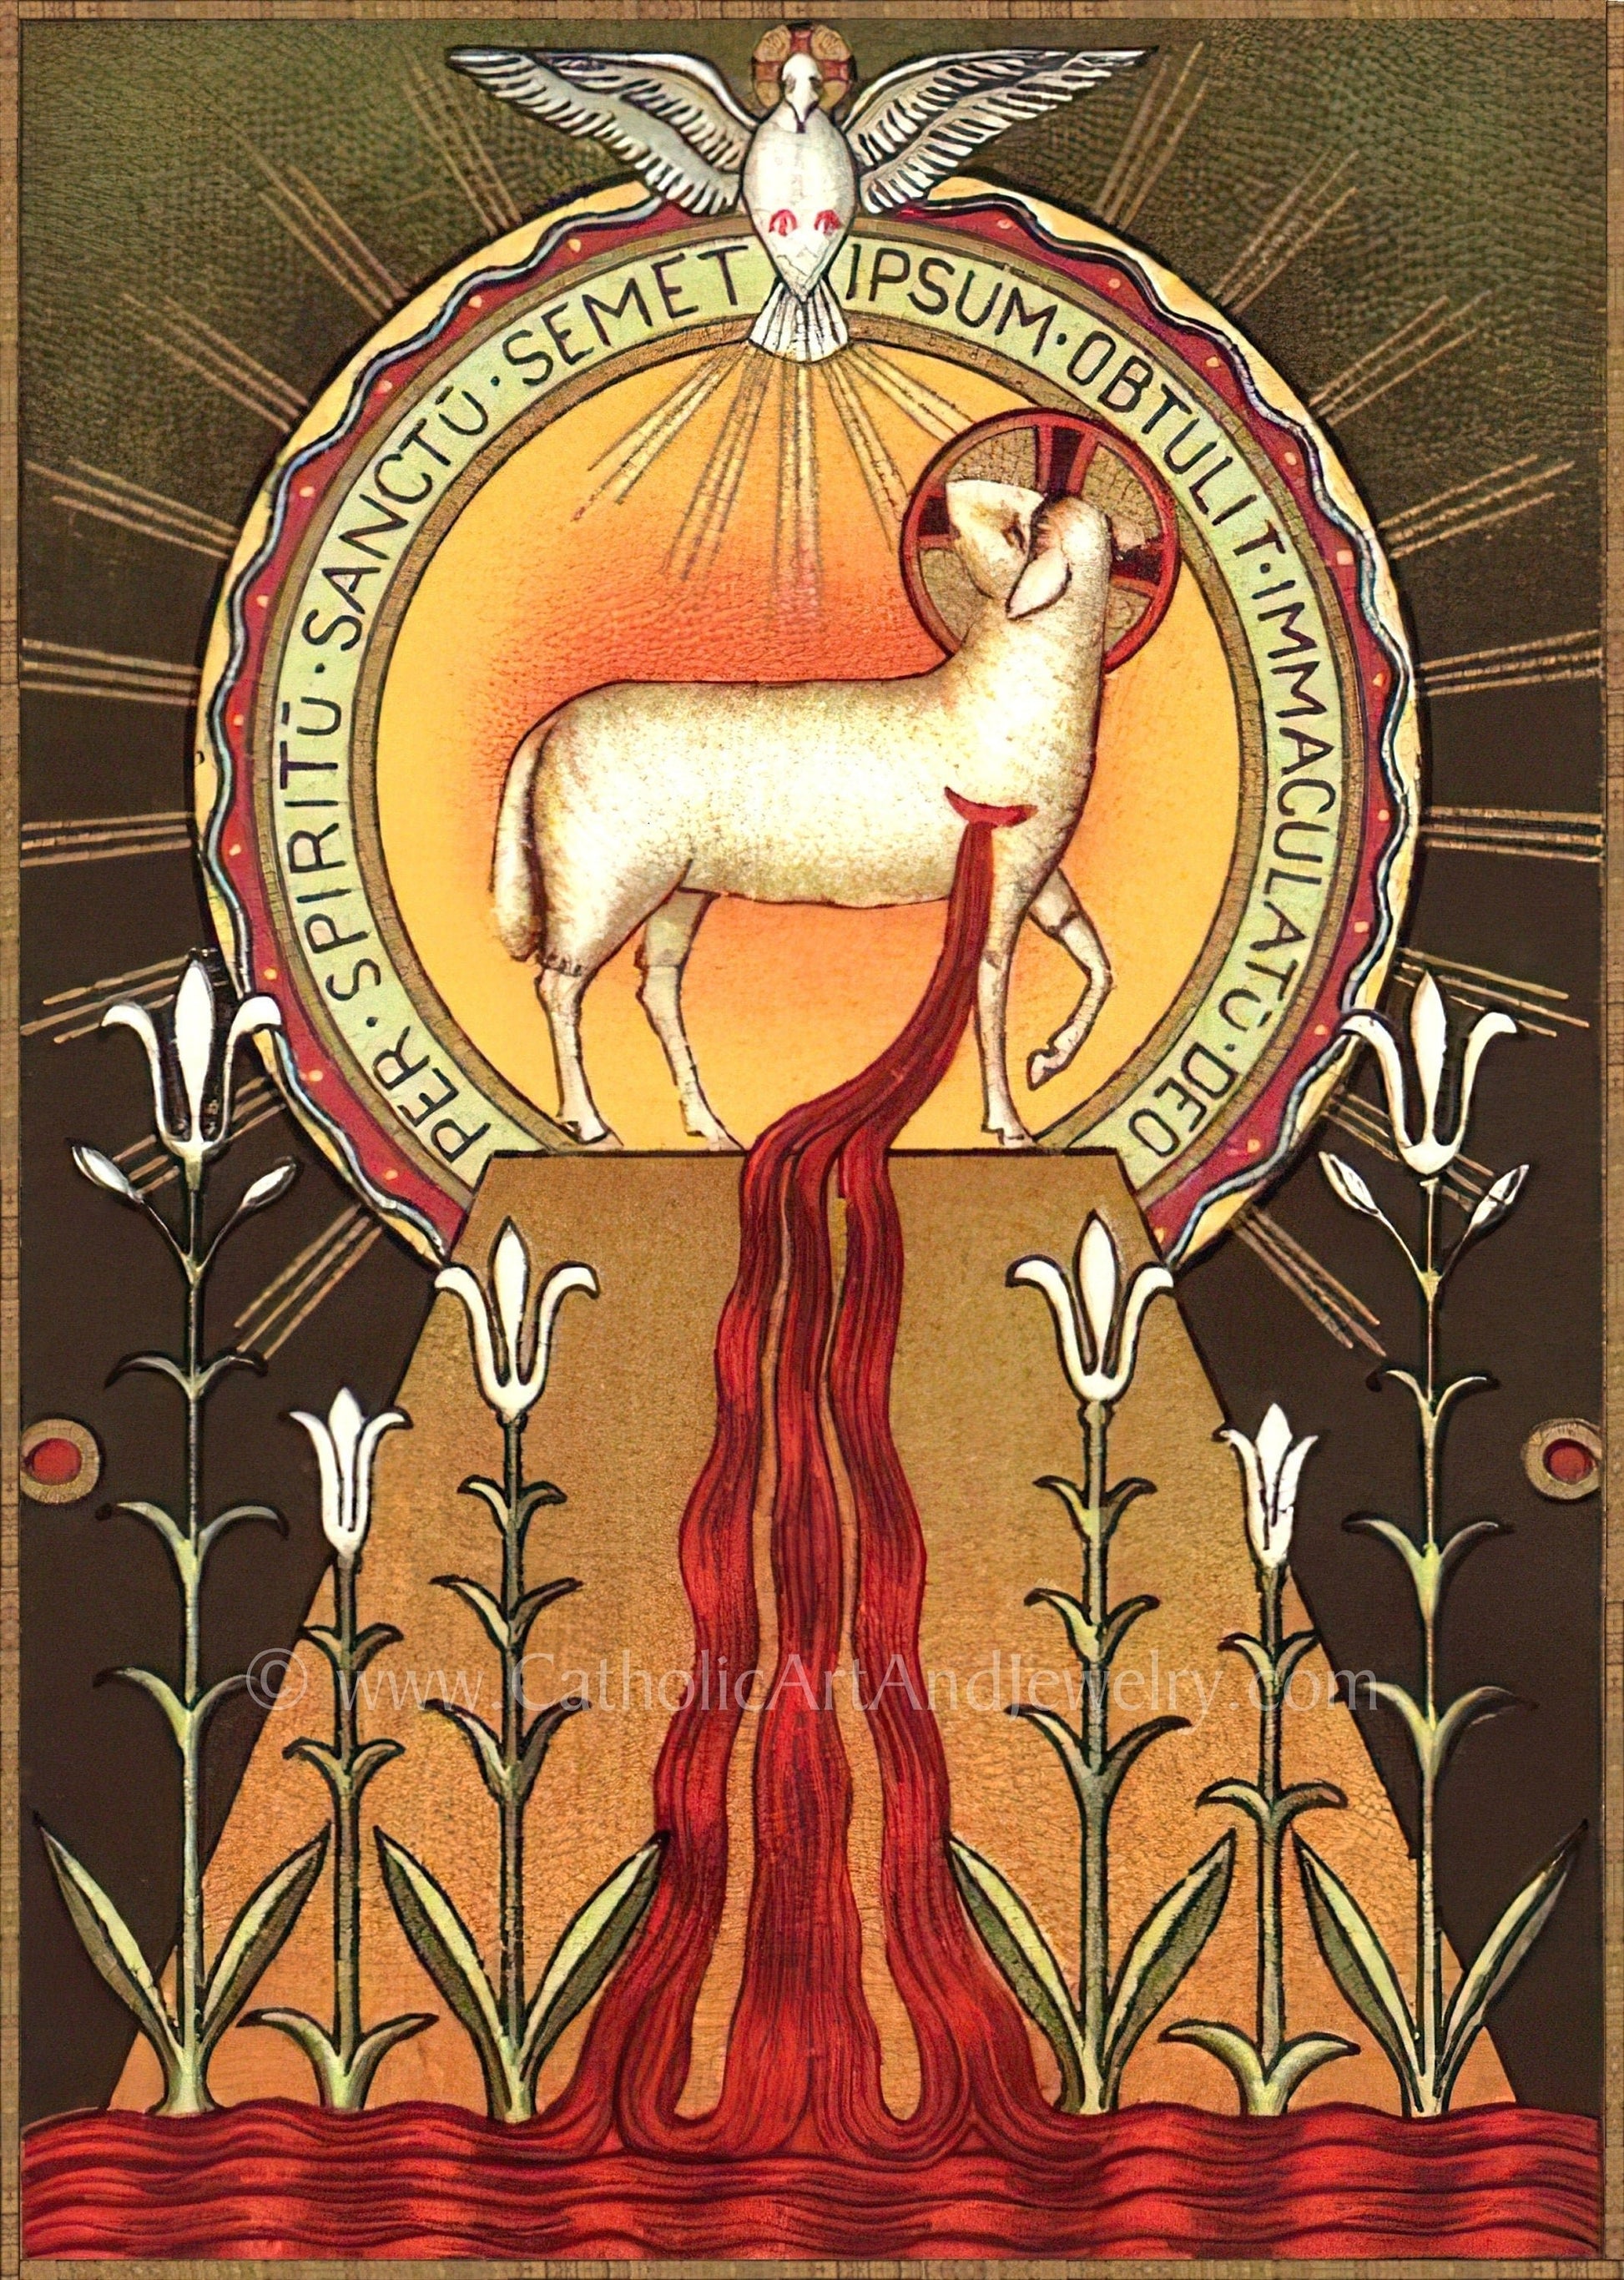 Blood of the Lamb – Benedictine Beuron Art – Catholic Art Print – Archival Quality - Catholic Art and Jewelry